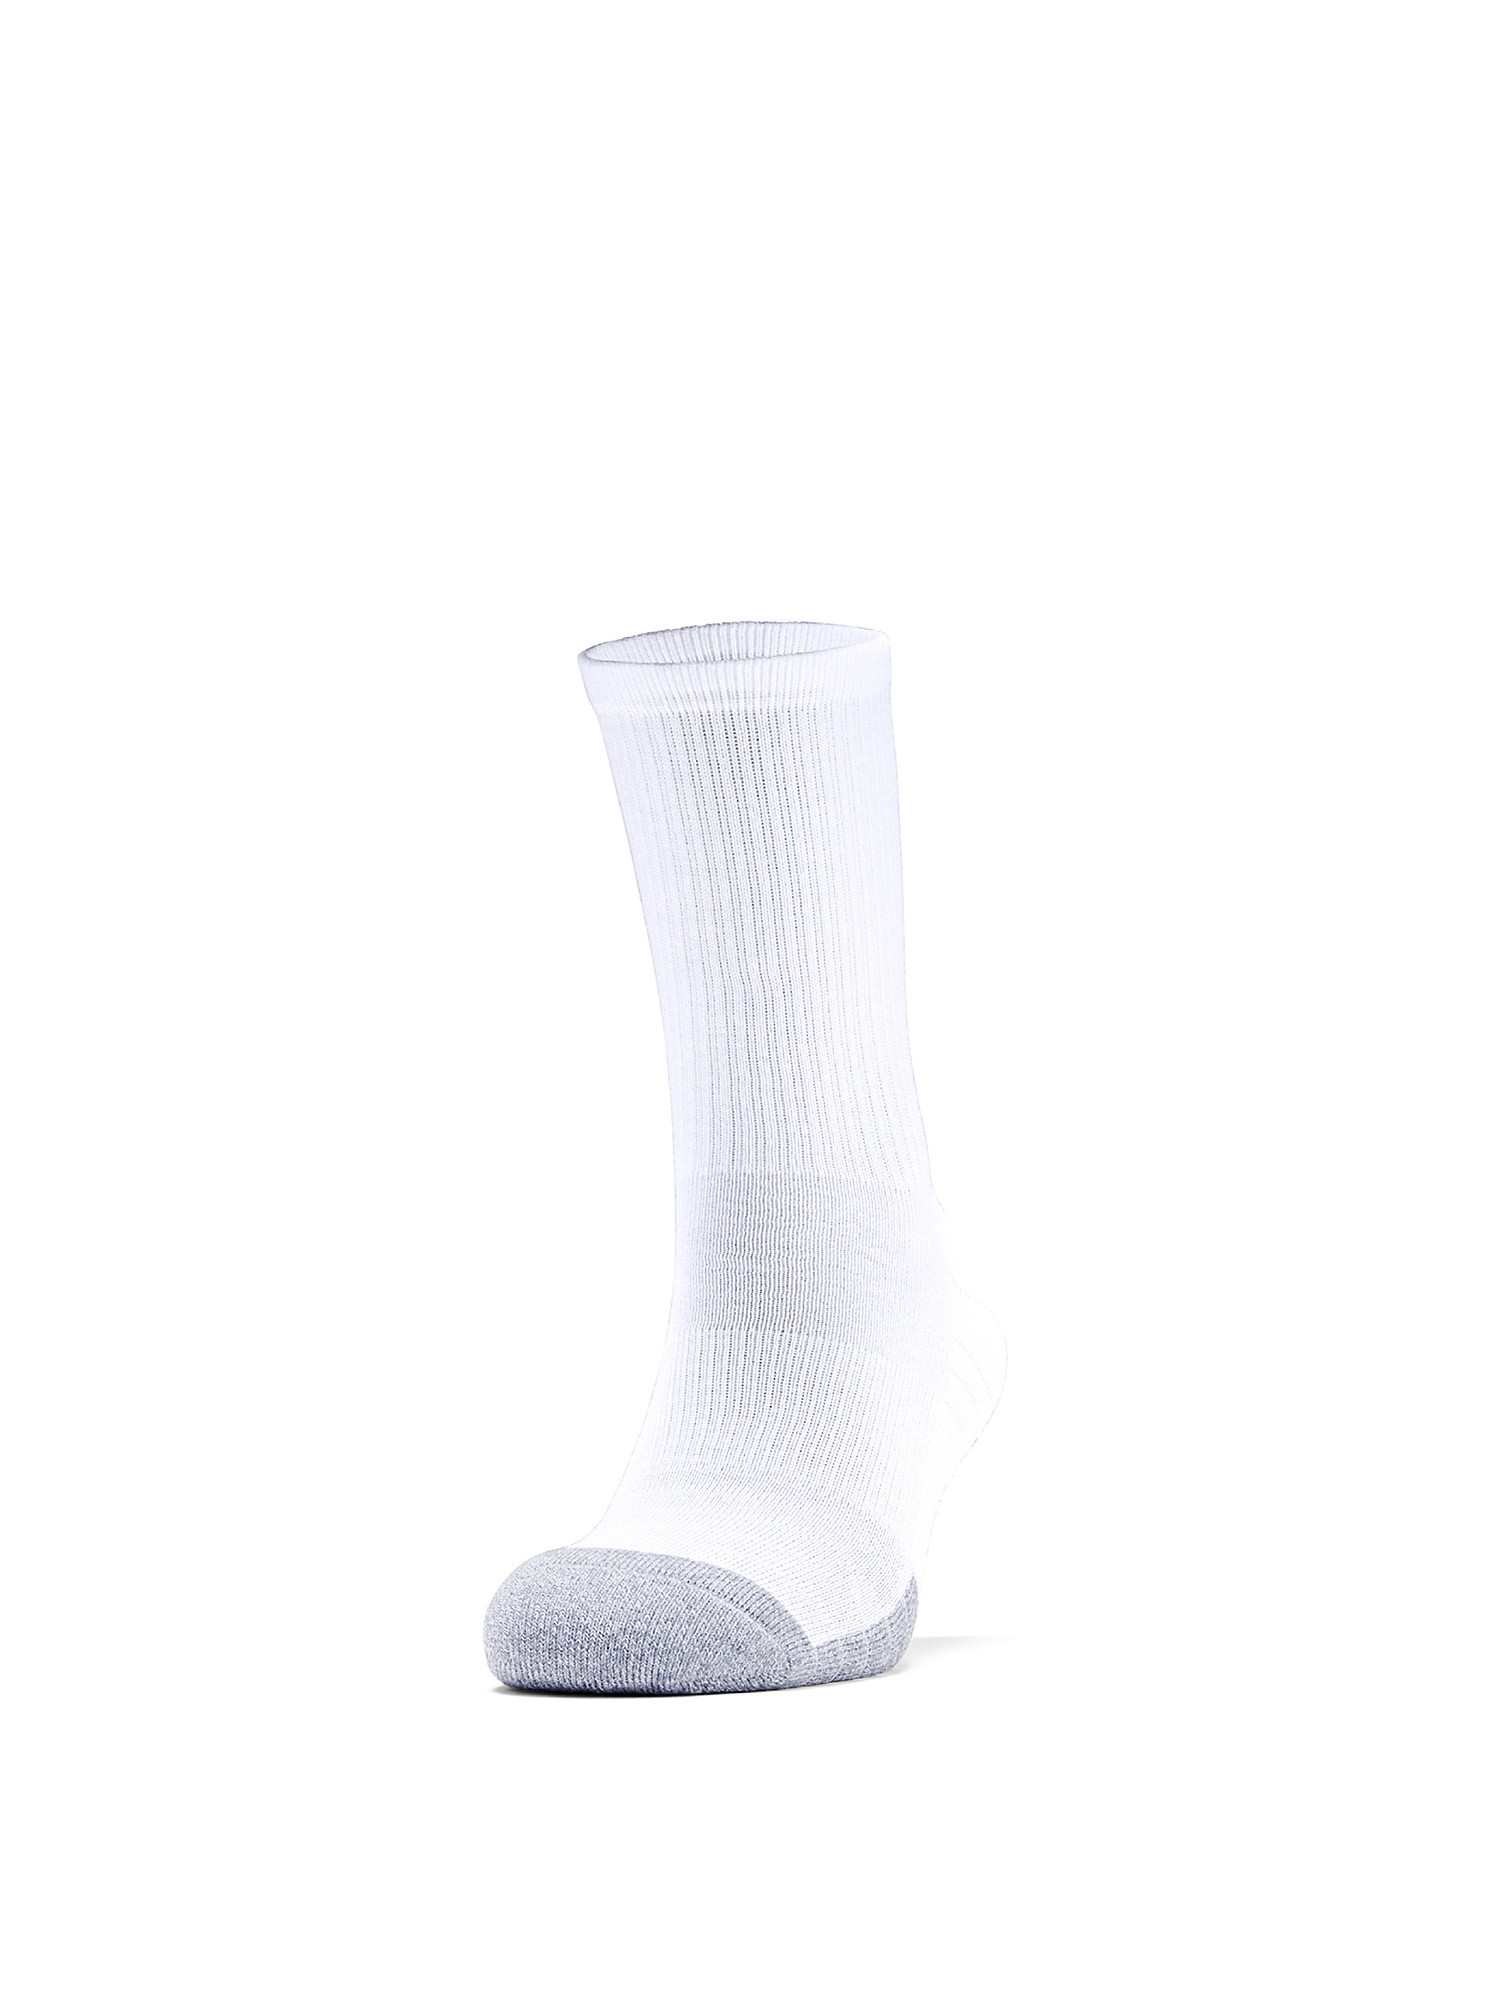 Under Armour - HeatGear® Crew socks, White, large image number 1